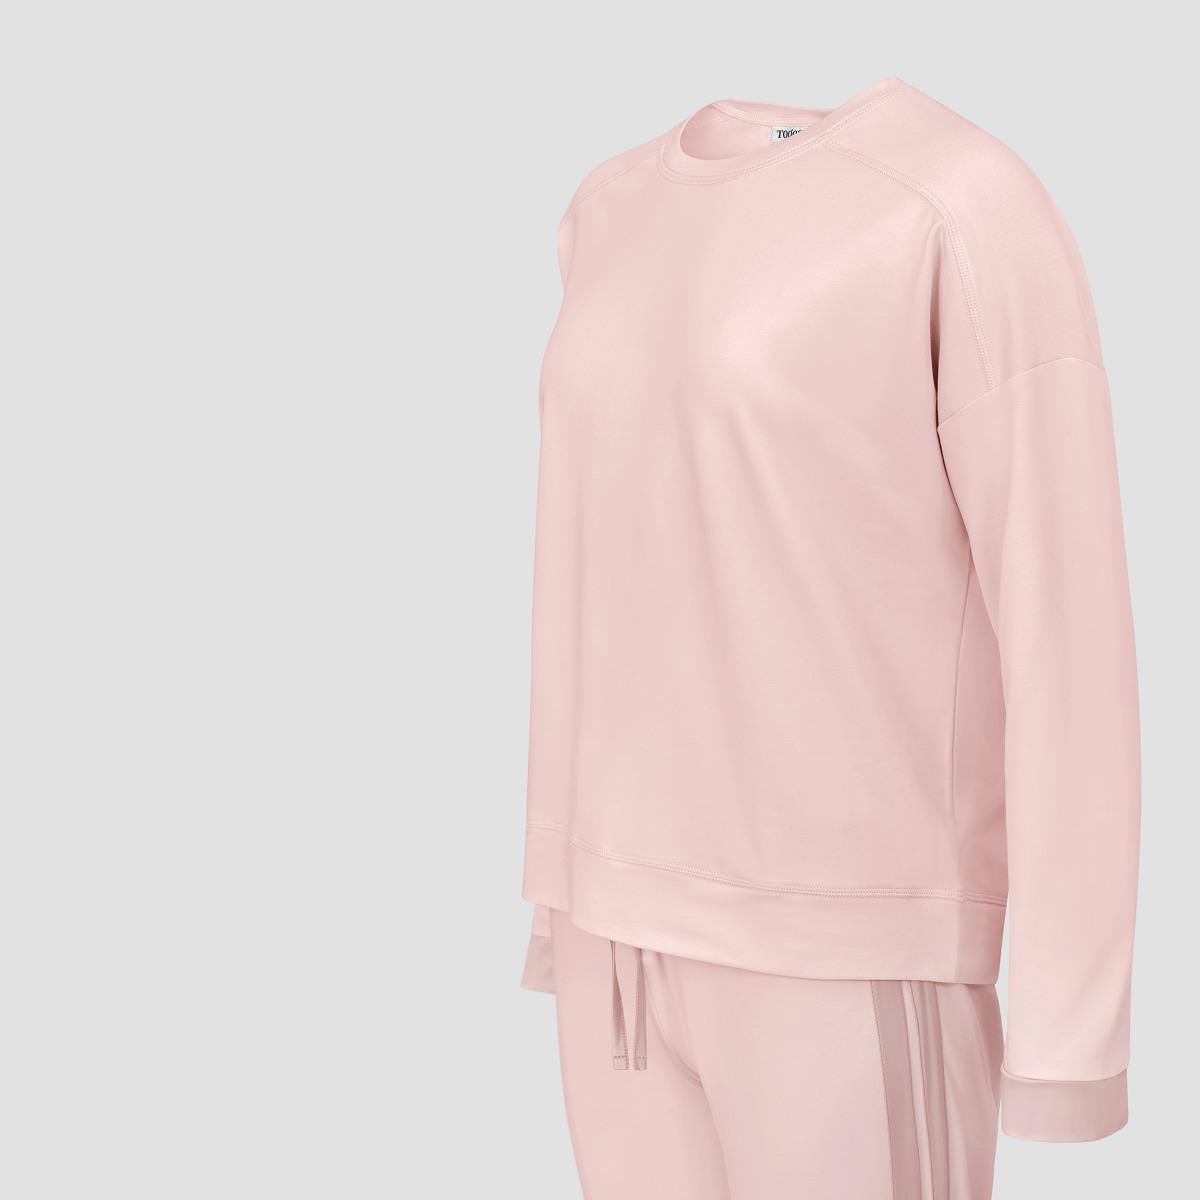 Пижама Togas Рене розовая женская xs(42), цвет розовый, размер XS (42) - фото 2